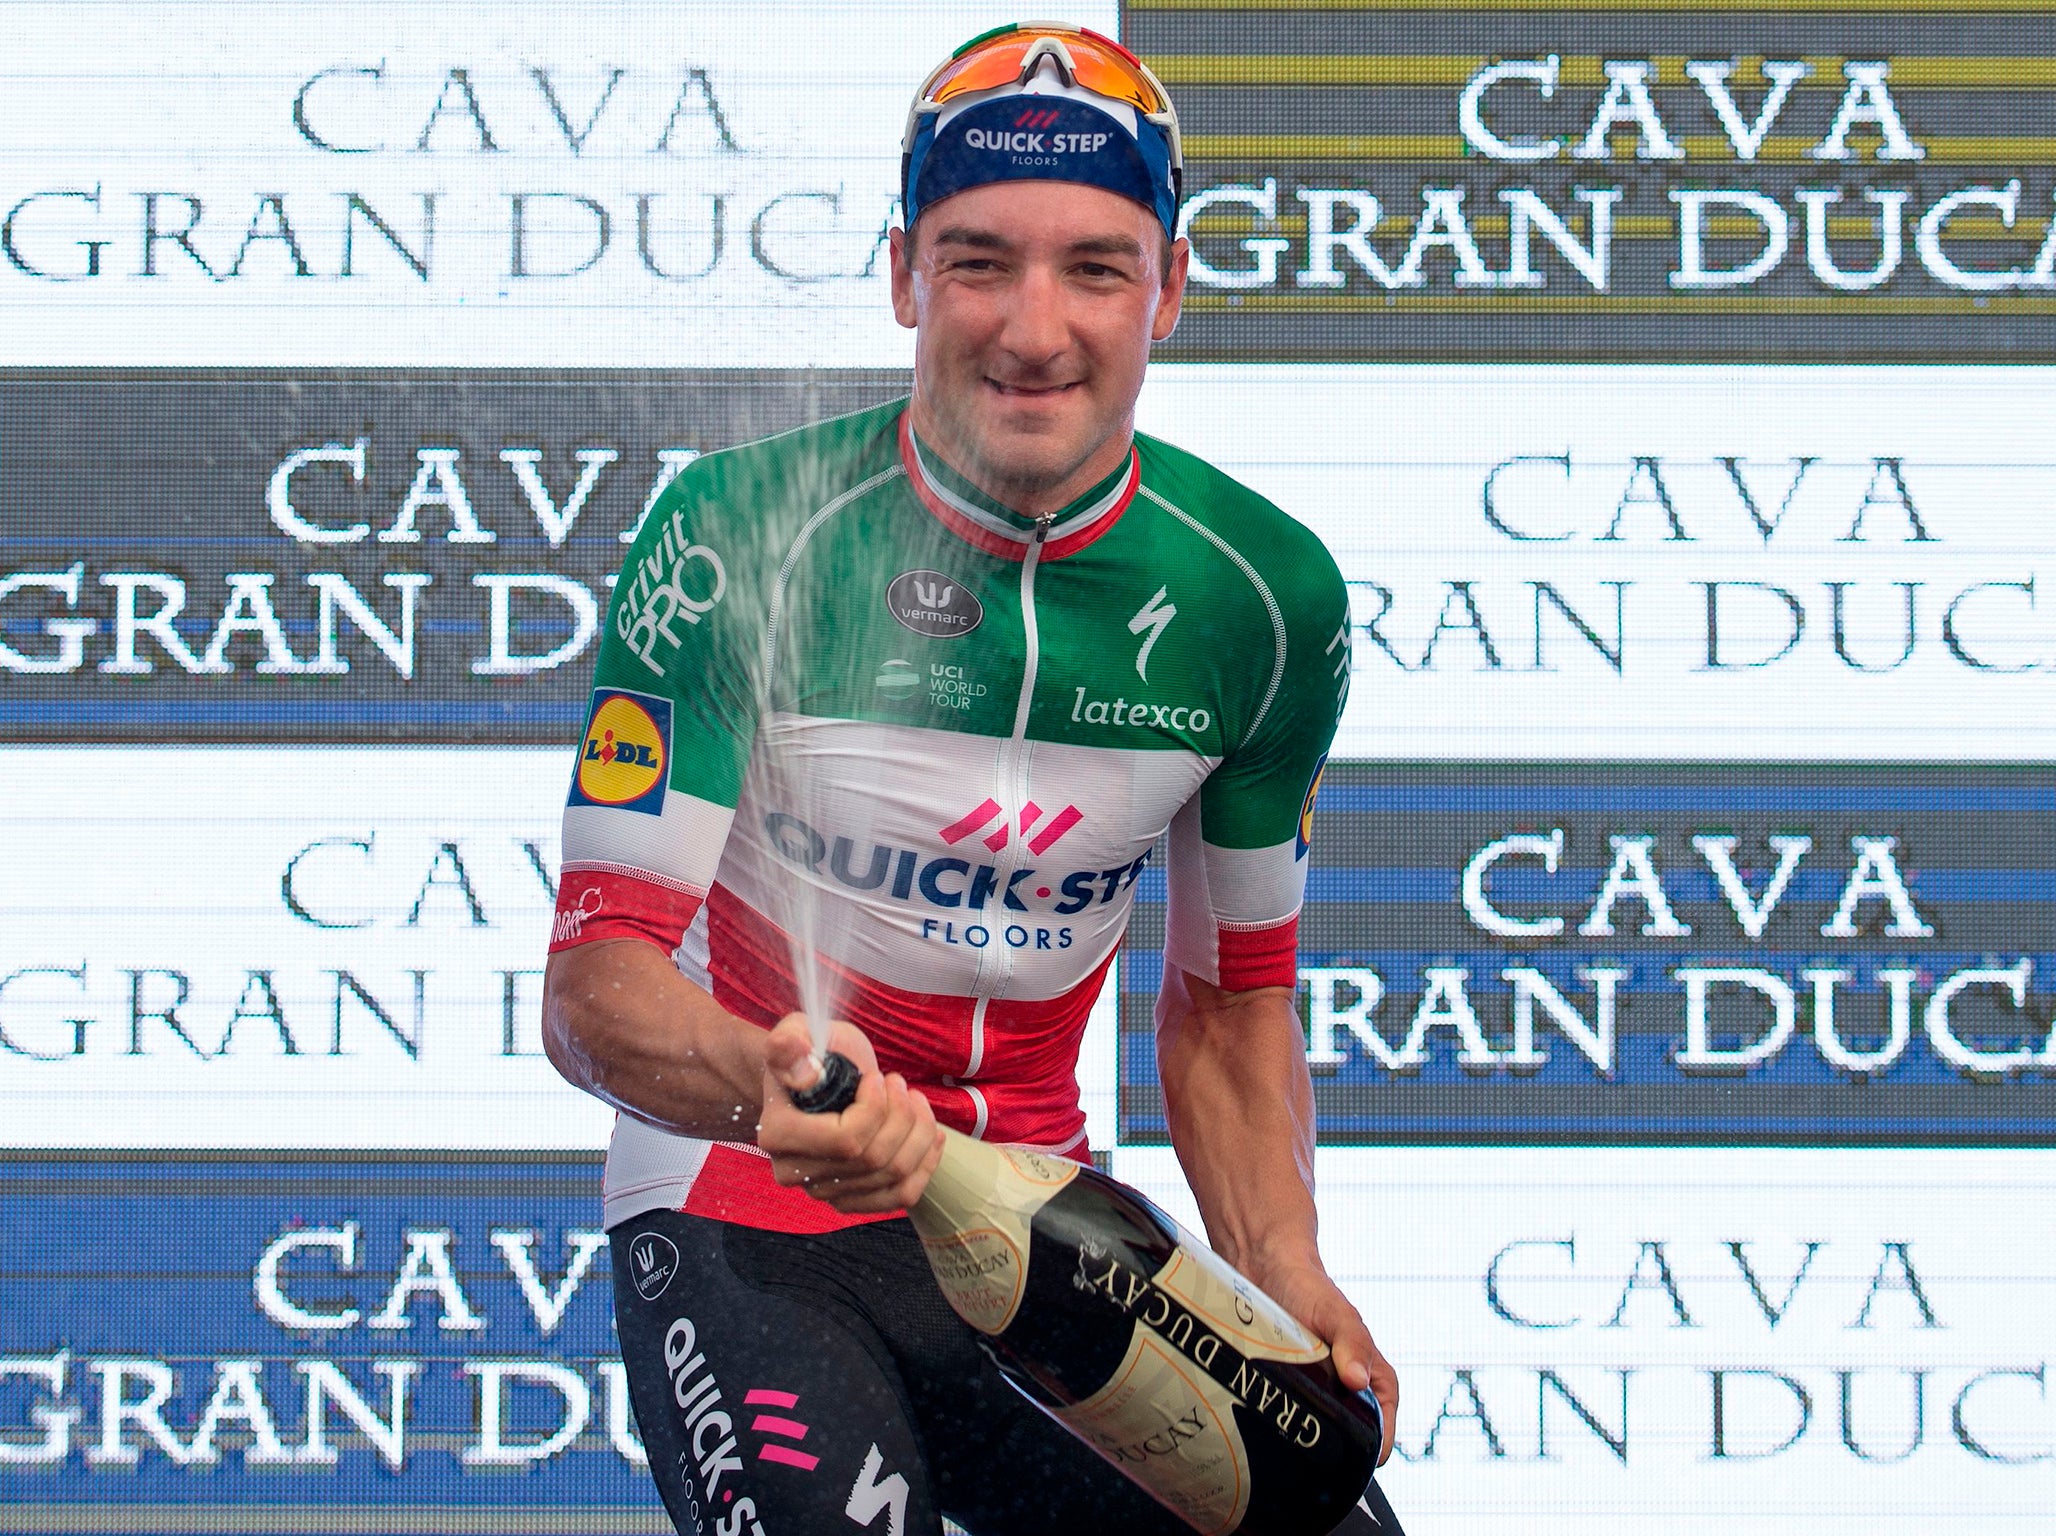 Quick - Step Floors' Italian cyclist Elia Viviani sprays some Cava